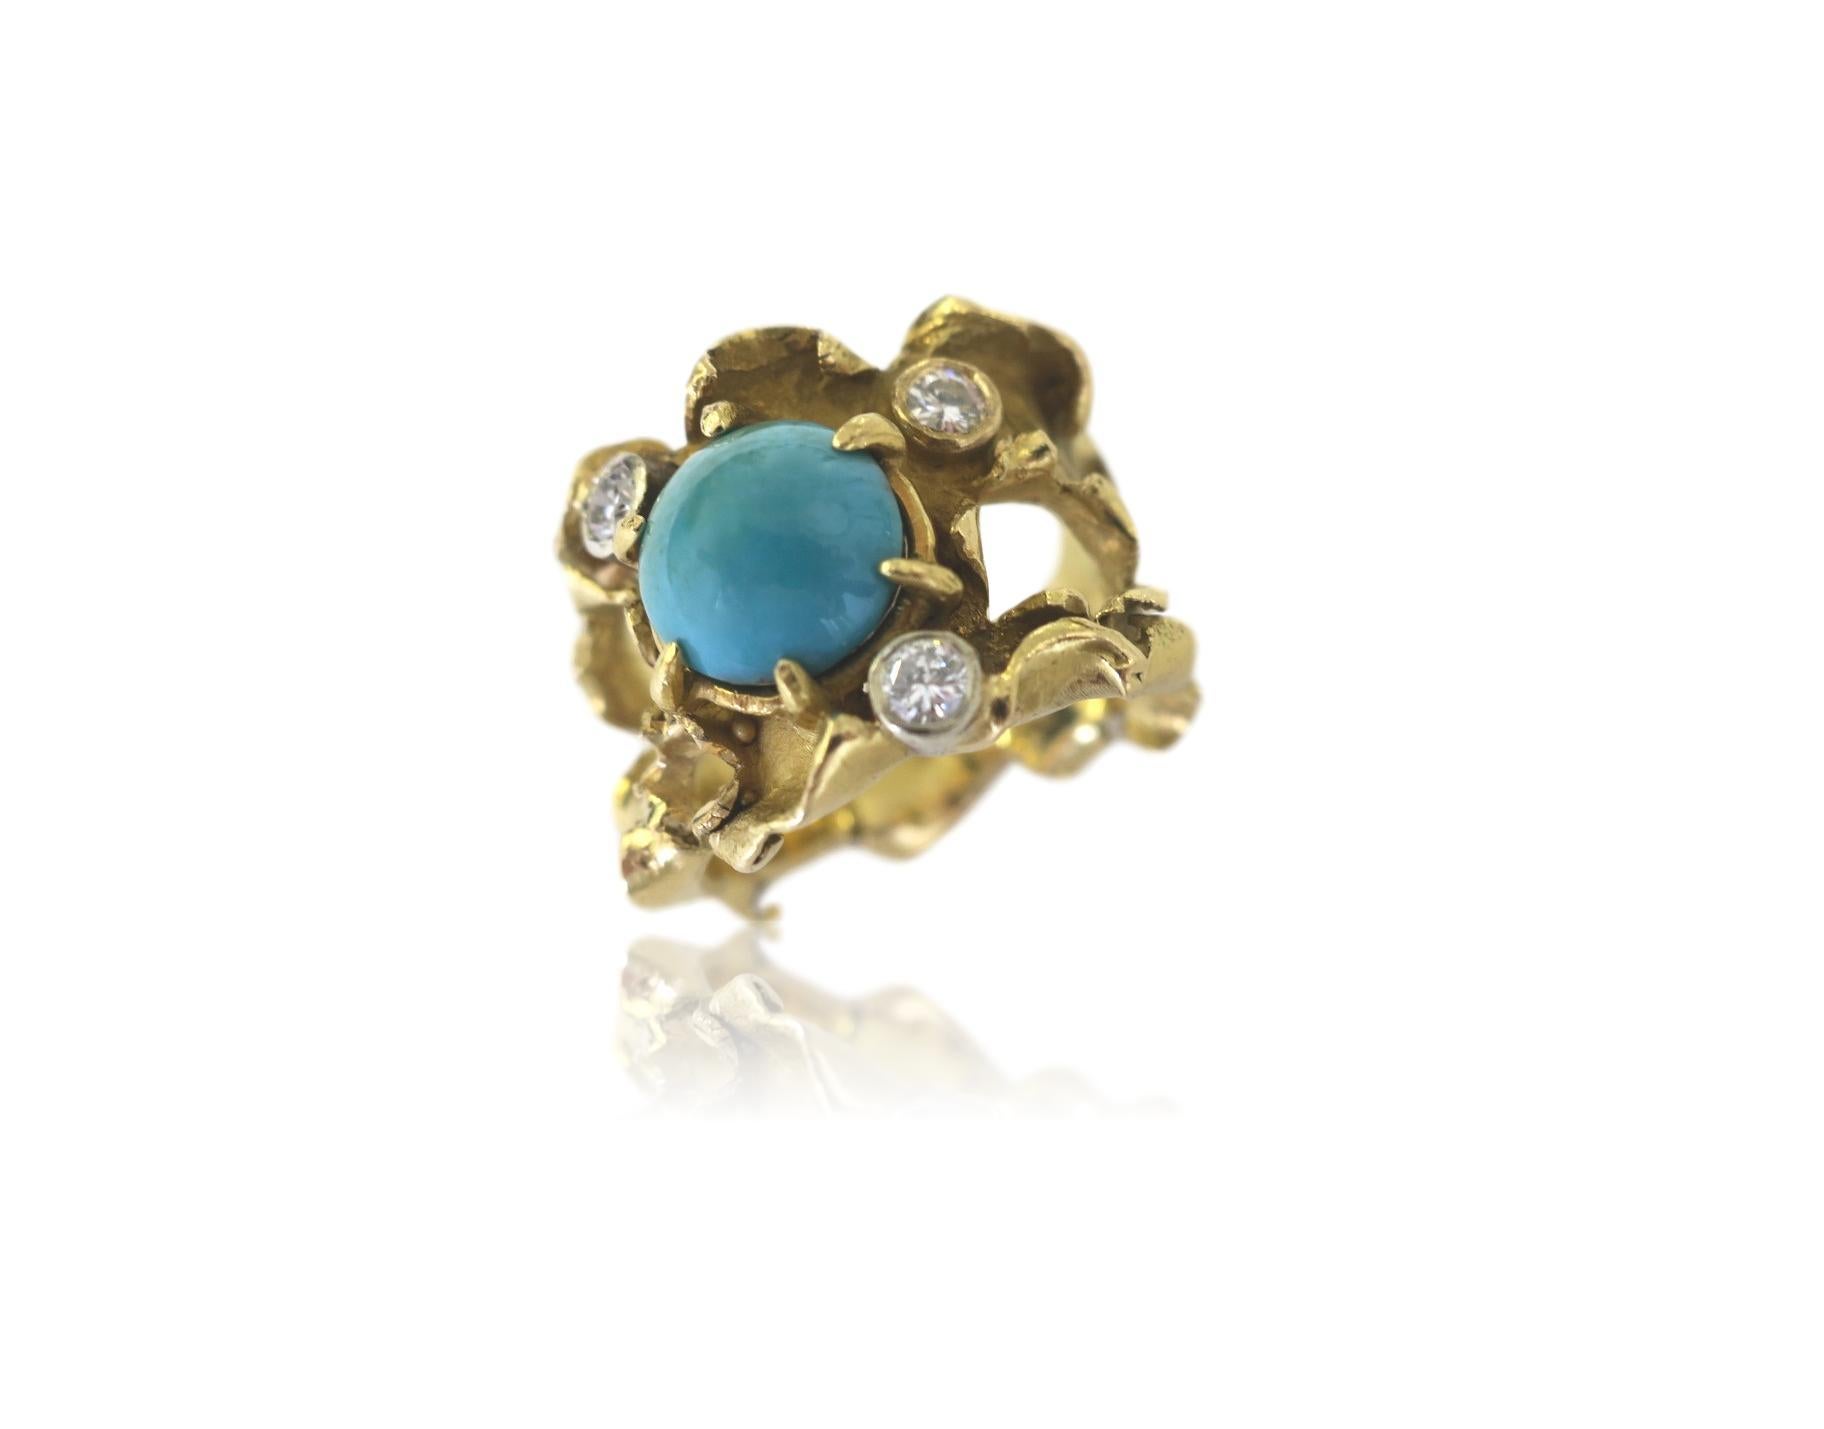 Modernist Turquoise and Diamond Ring, circa 1960